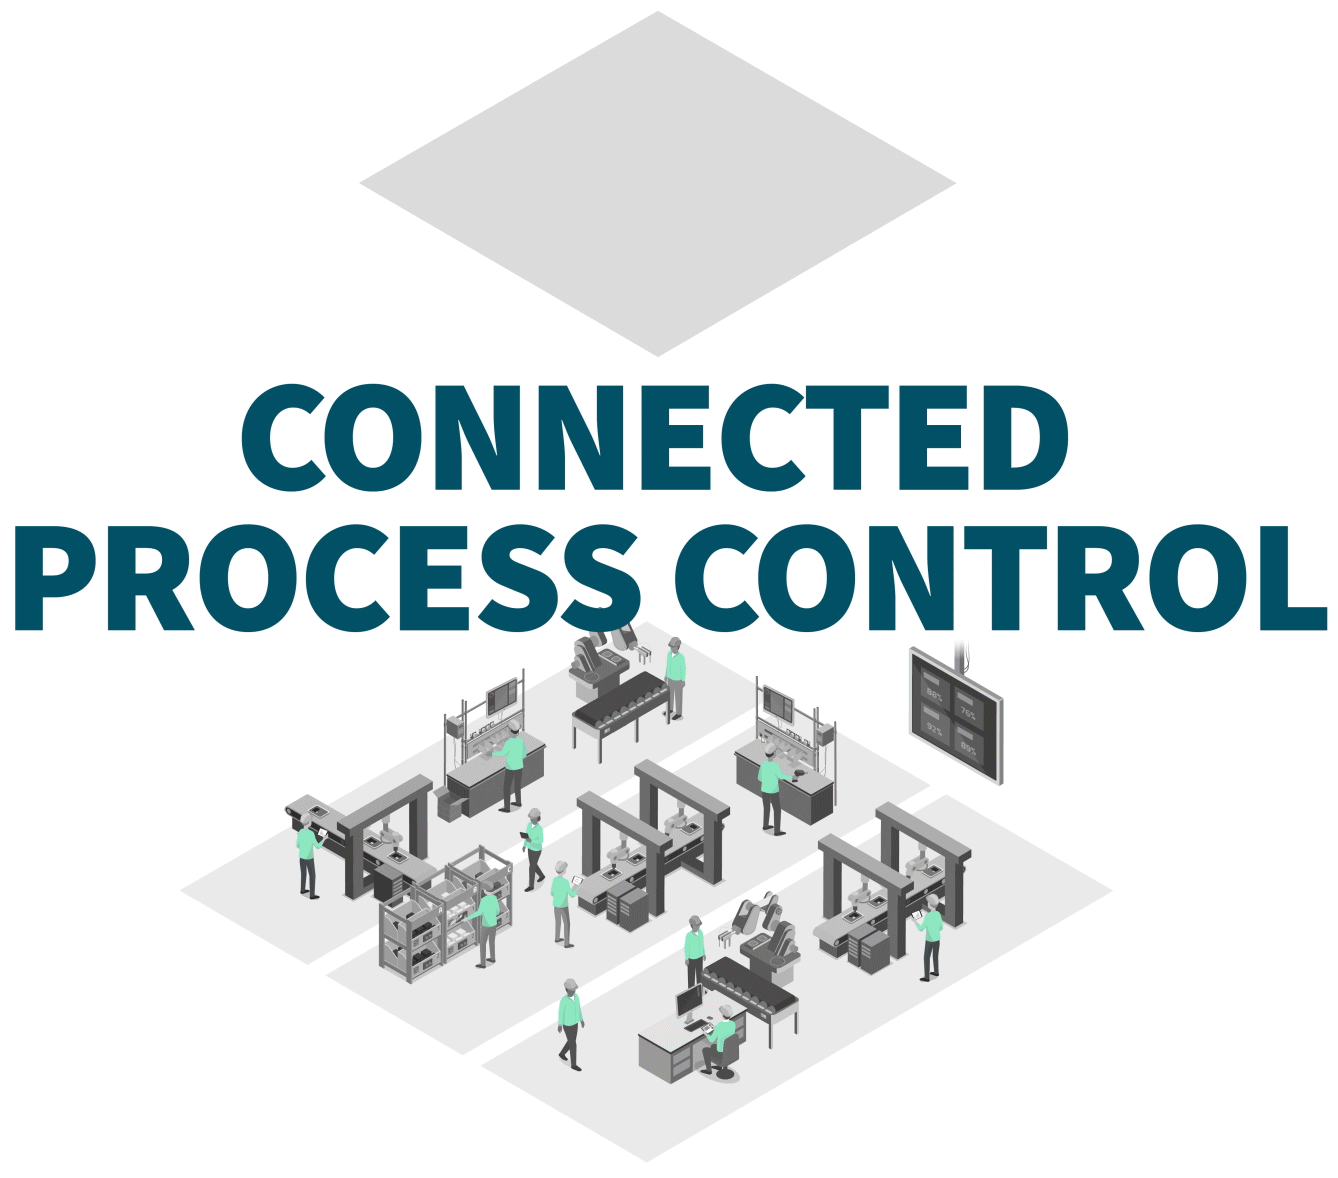 Epicor Connected Process Control